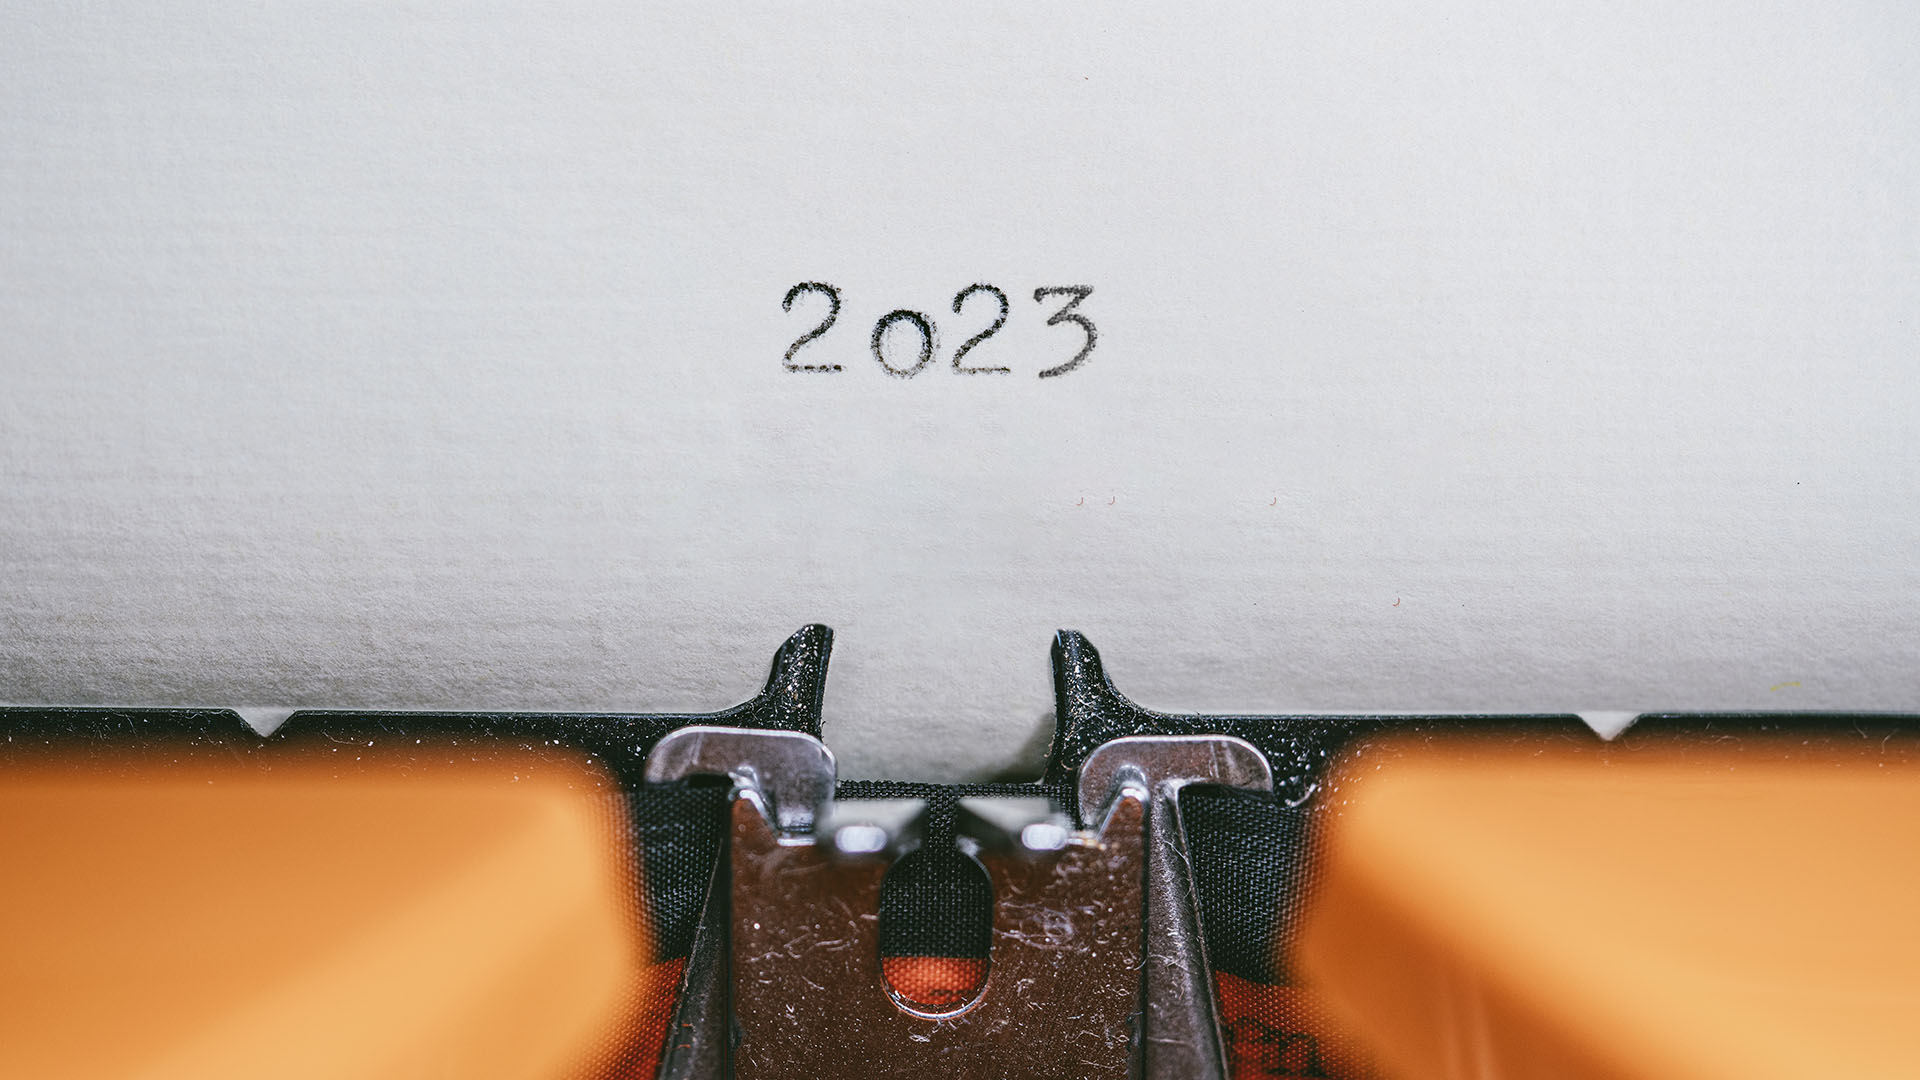 2023 — the year ahead